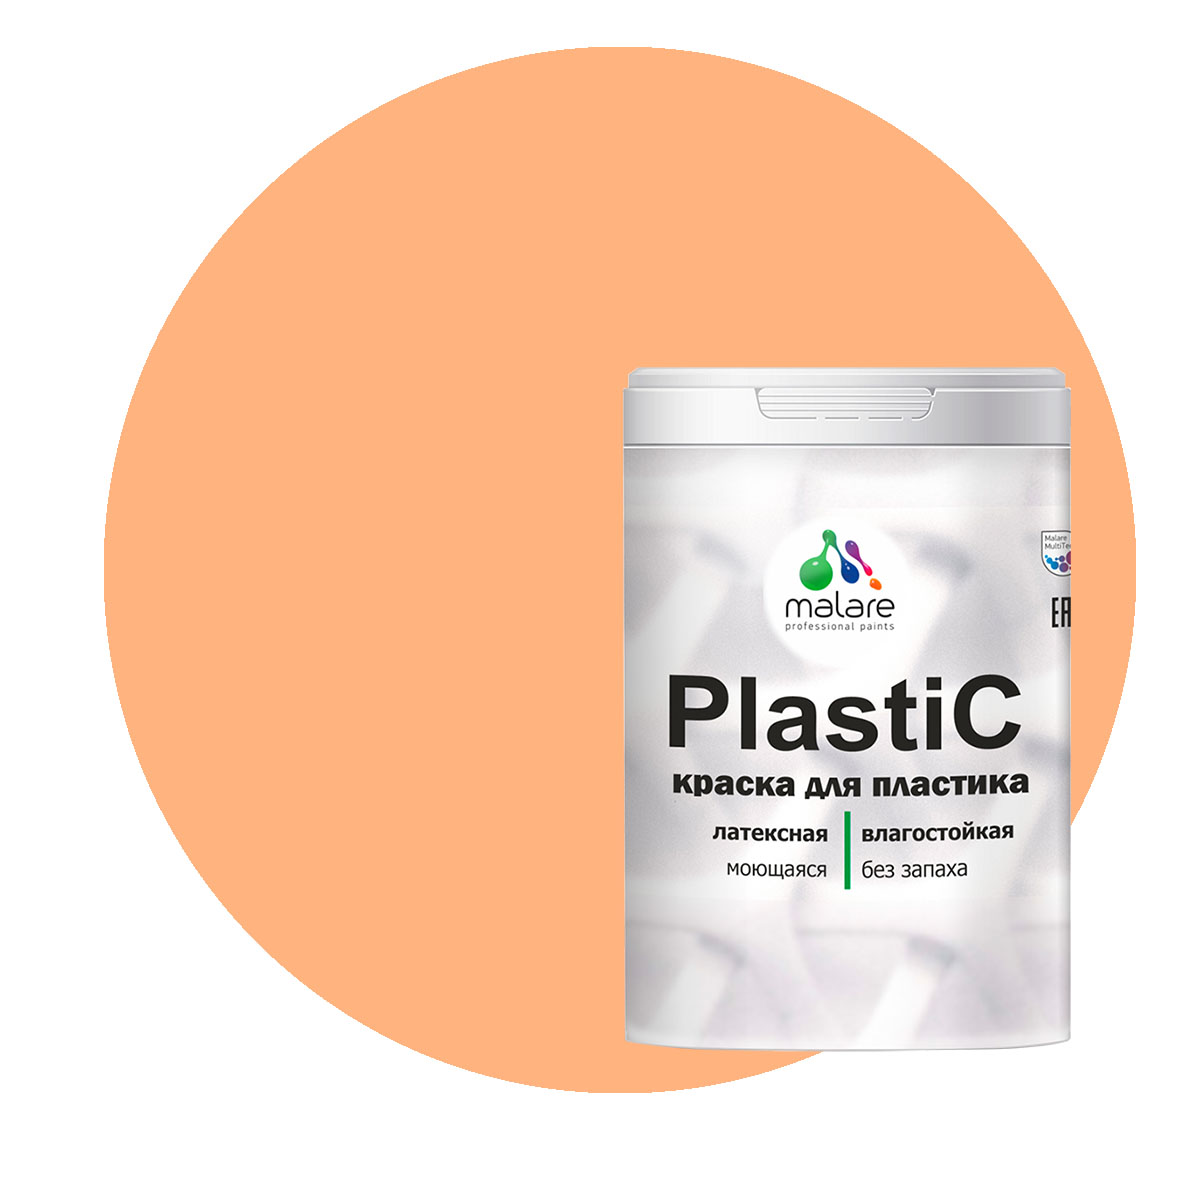 Краска Malare PlastiC для пластика, ПВХ, для сайдинга, свежая охра, 1 кг.